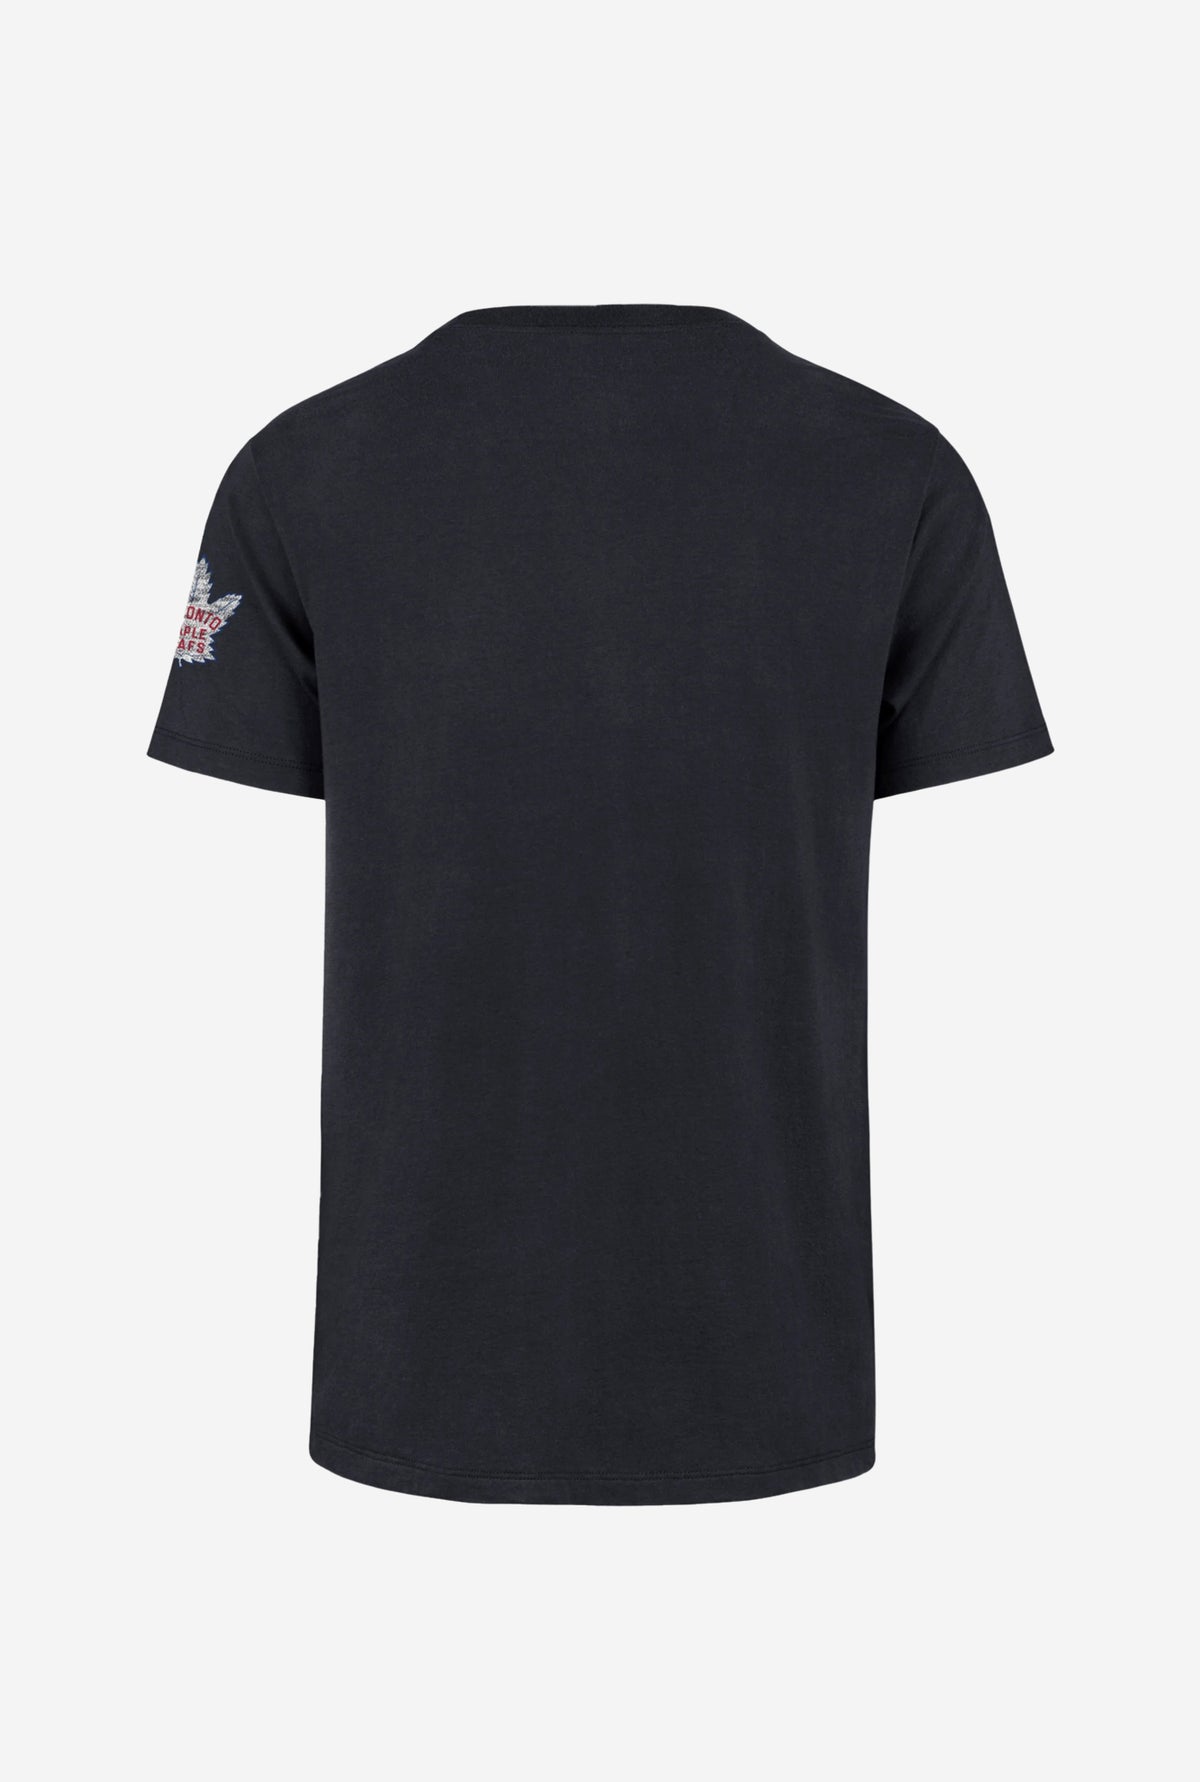 Toronto Maple Leafs Top Shelf Franklin T-Shirt